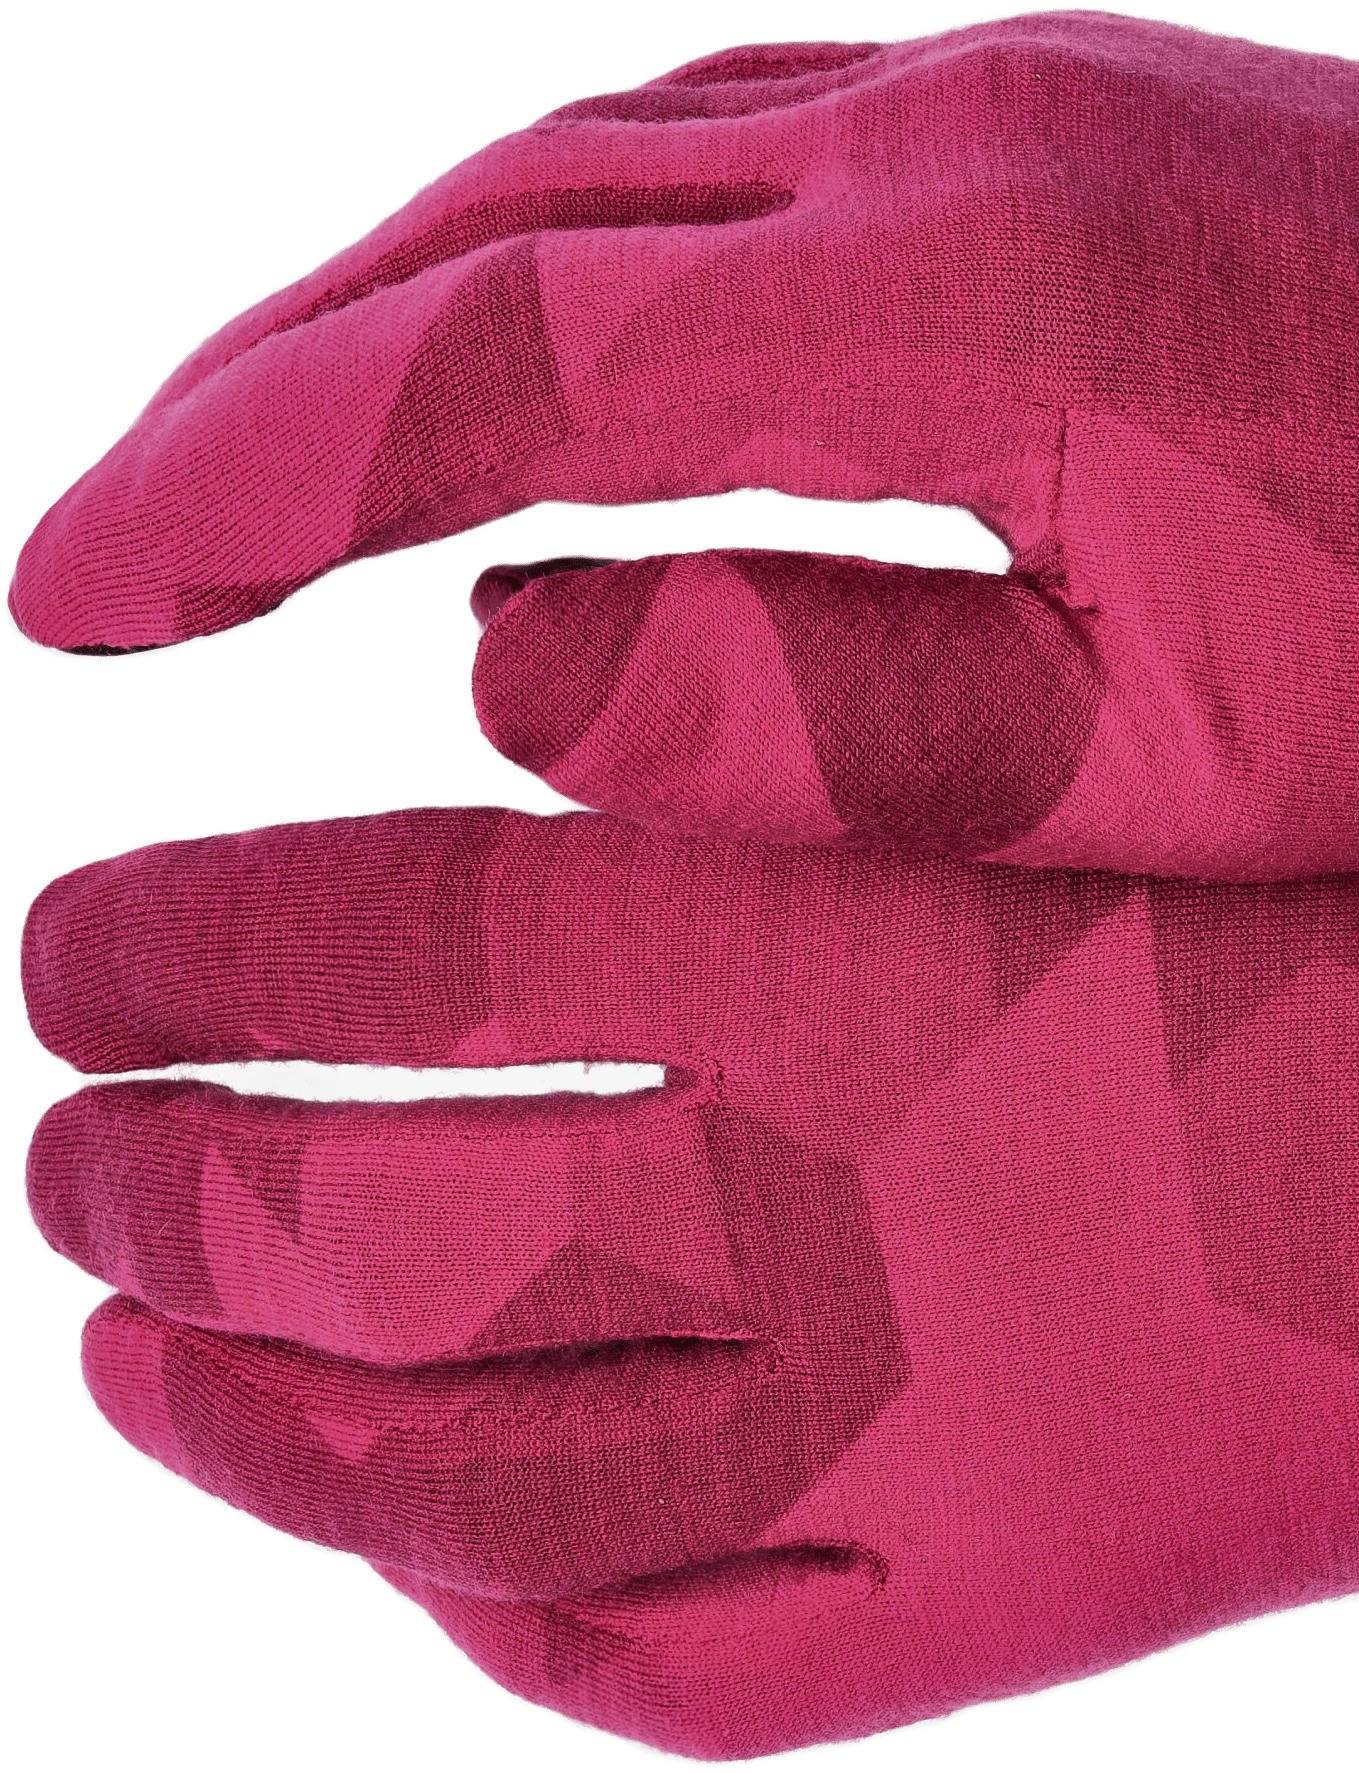 Перчатки Salewa Cristallo Liner 28214 6319 L розовый фото 4